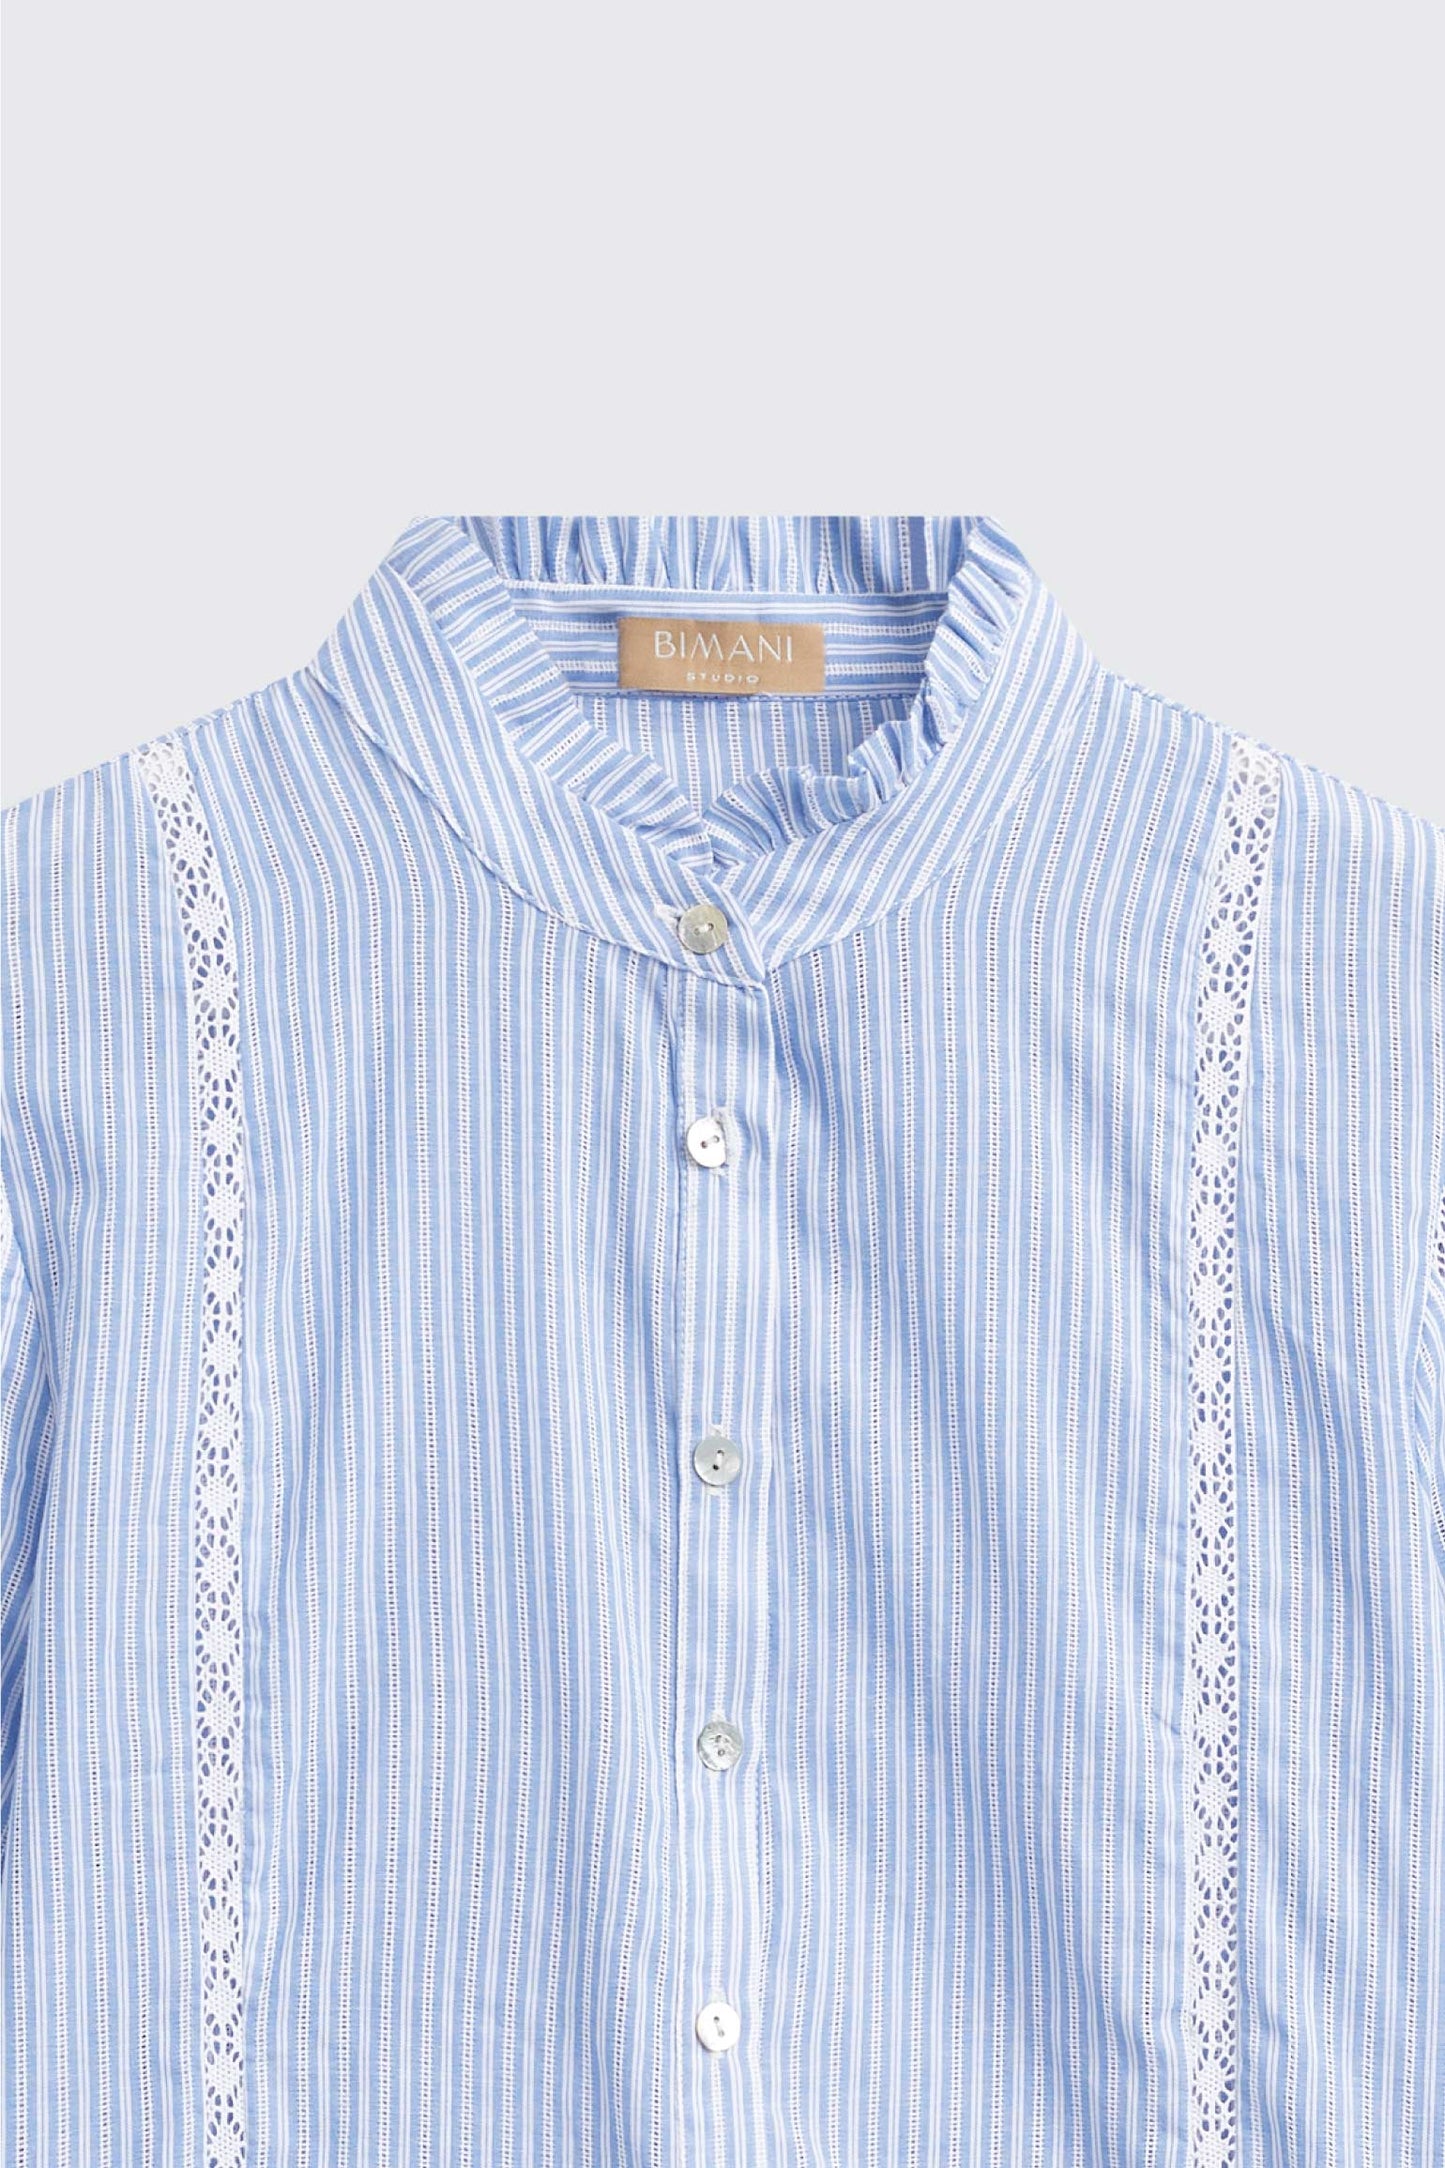 Camisa EVANS Blue Stripes - BIMANI